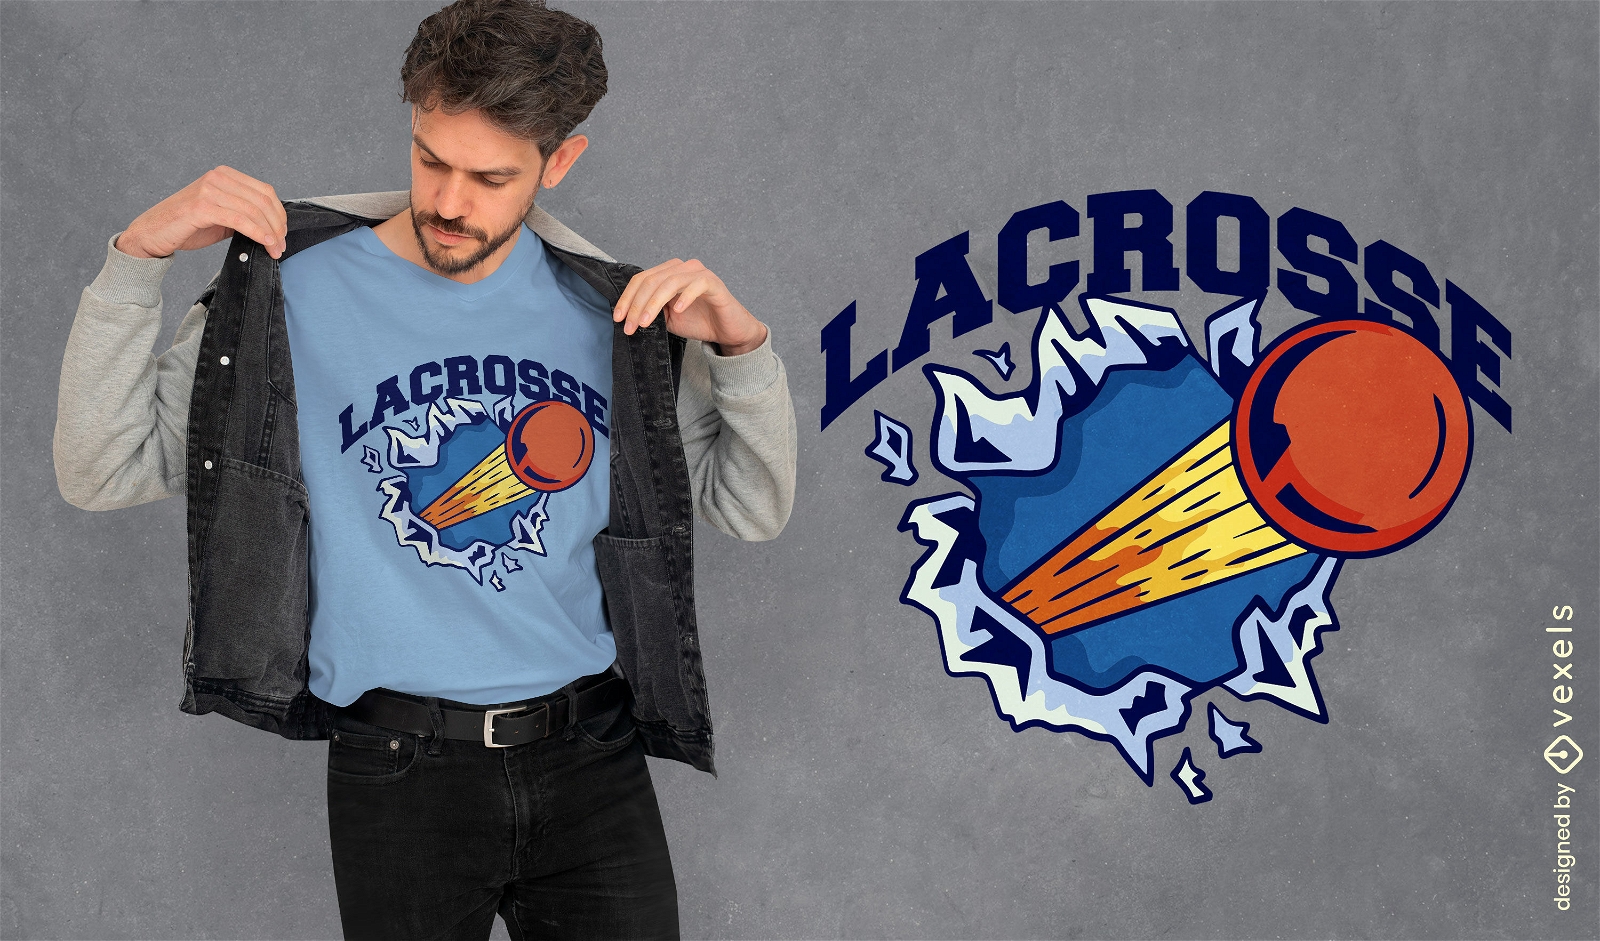 Lacrosse wildes T-Shirt-Design